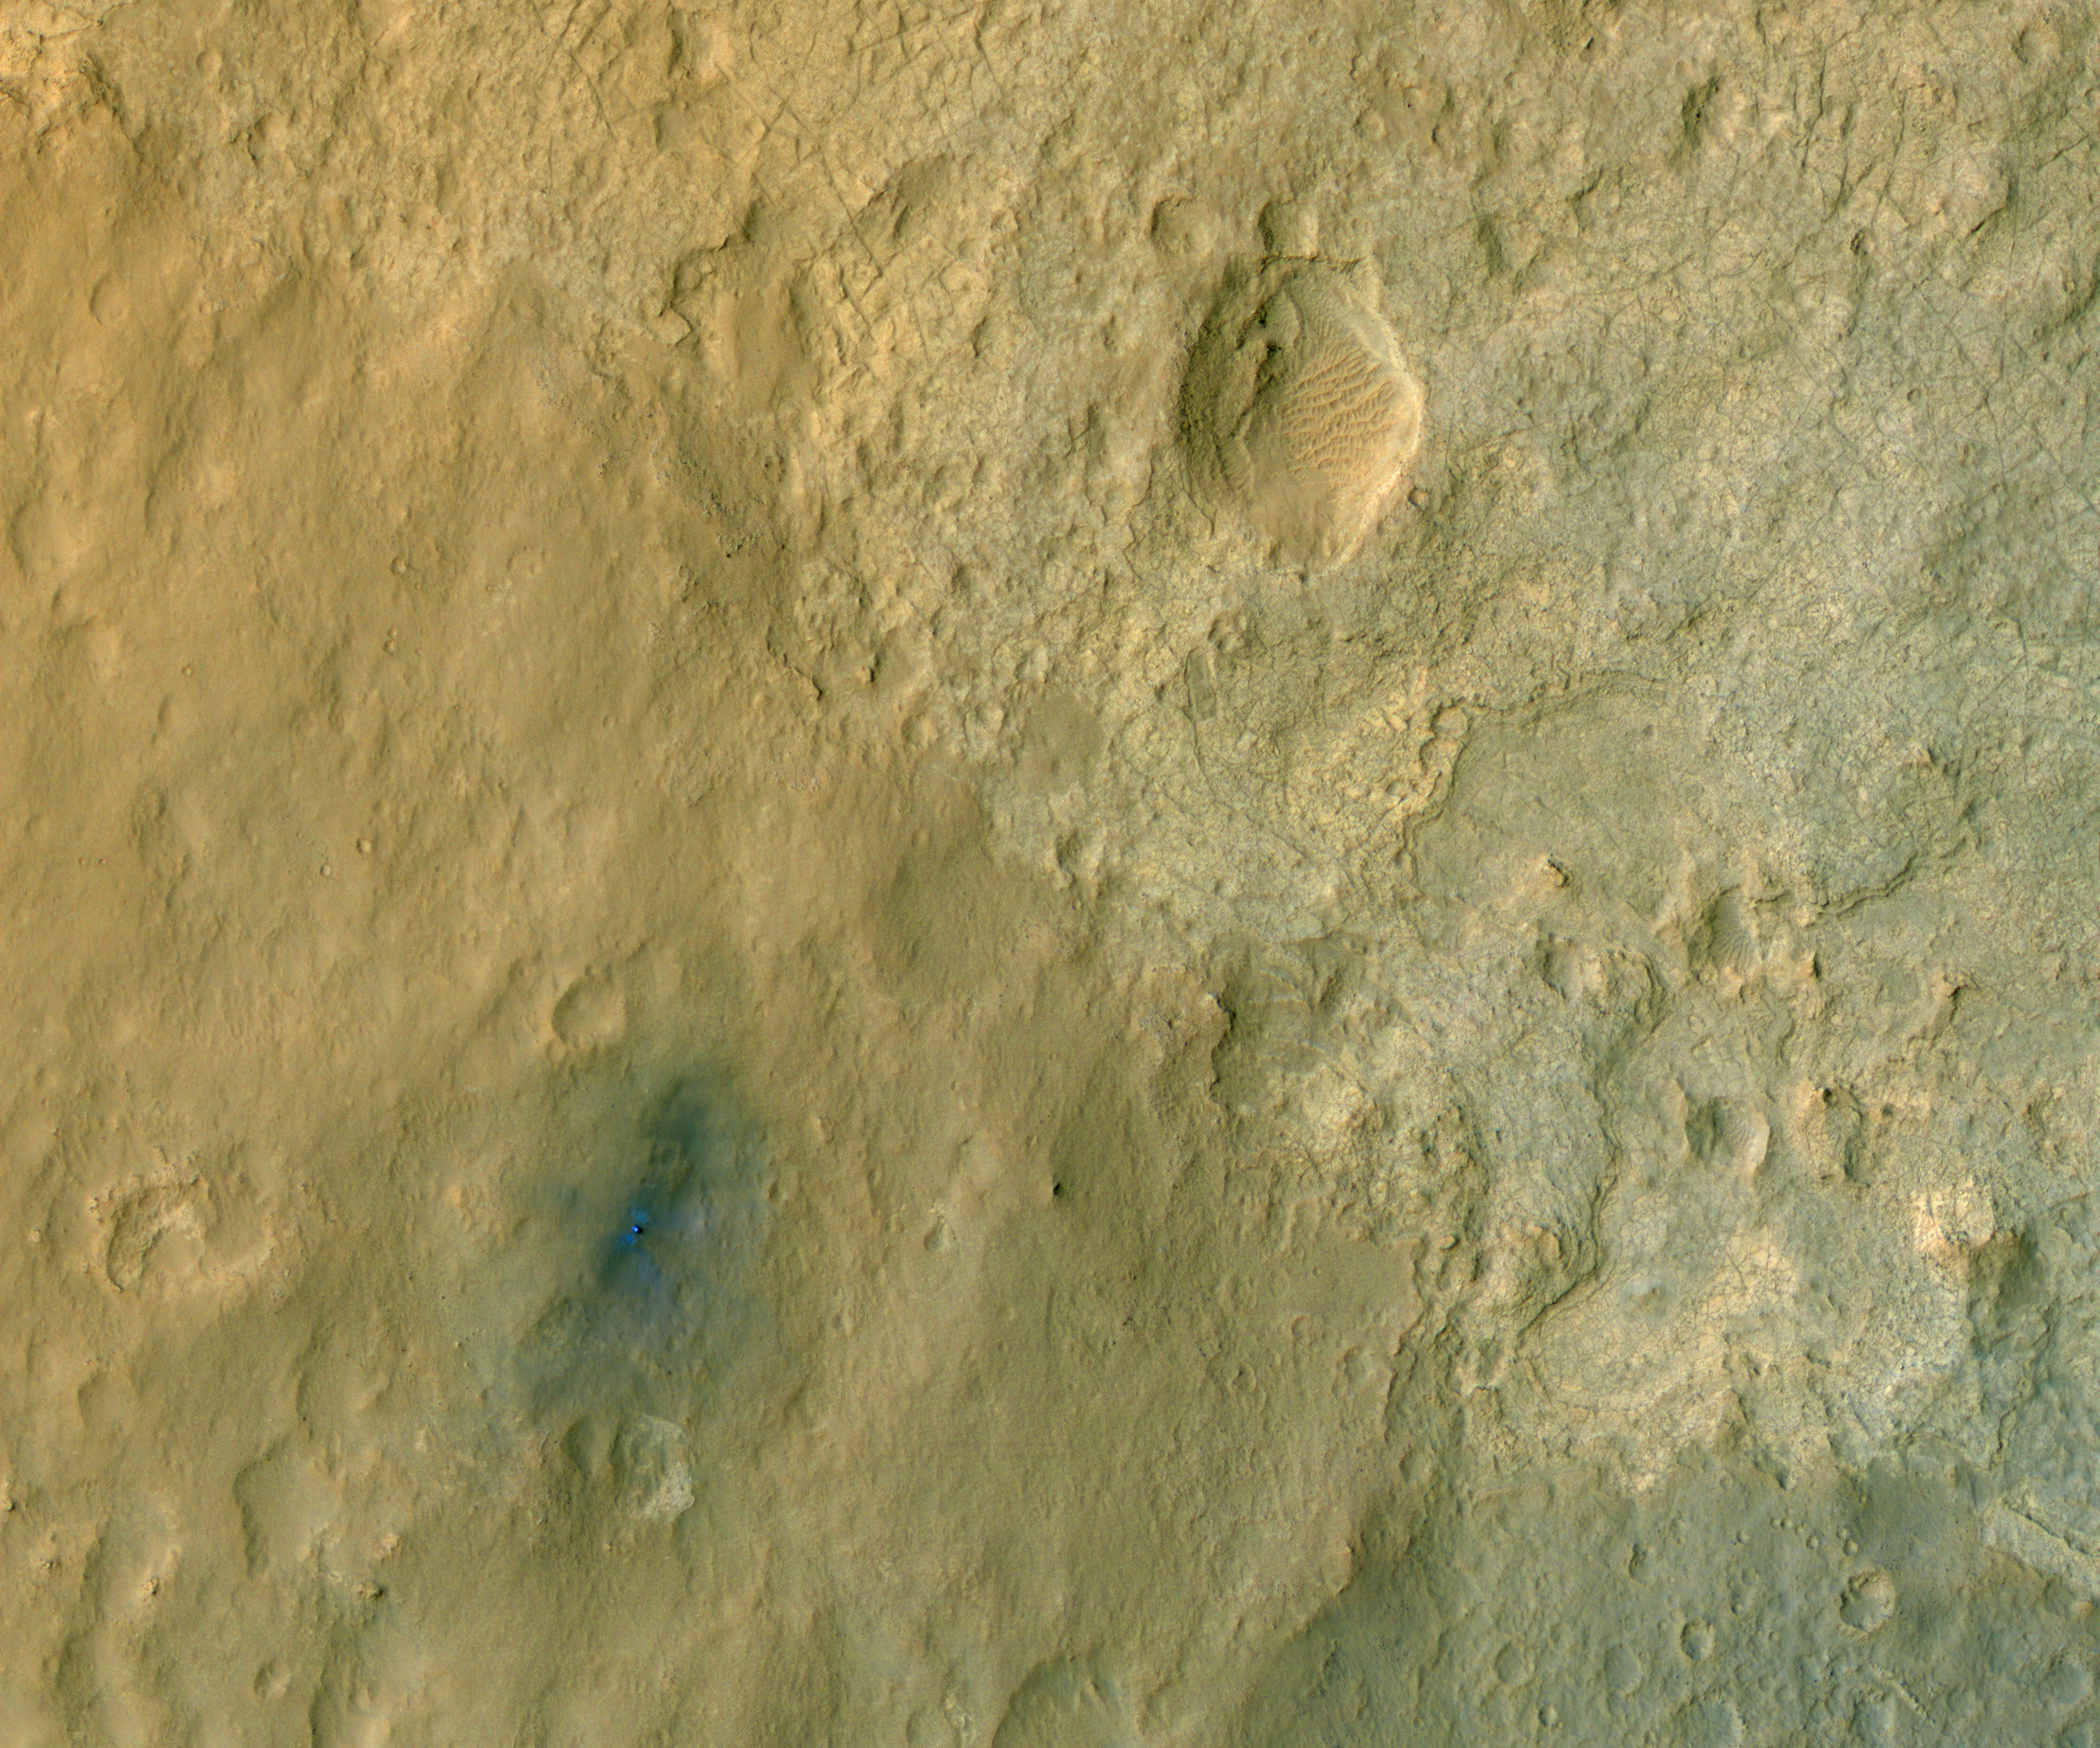 Nasa's Curiosity Mars rover seen in new satellite image - BBC News